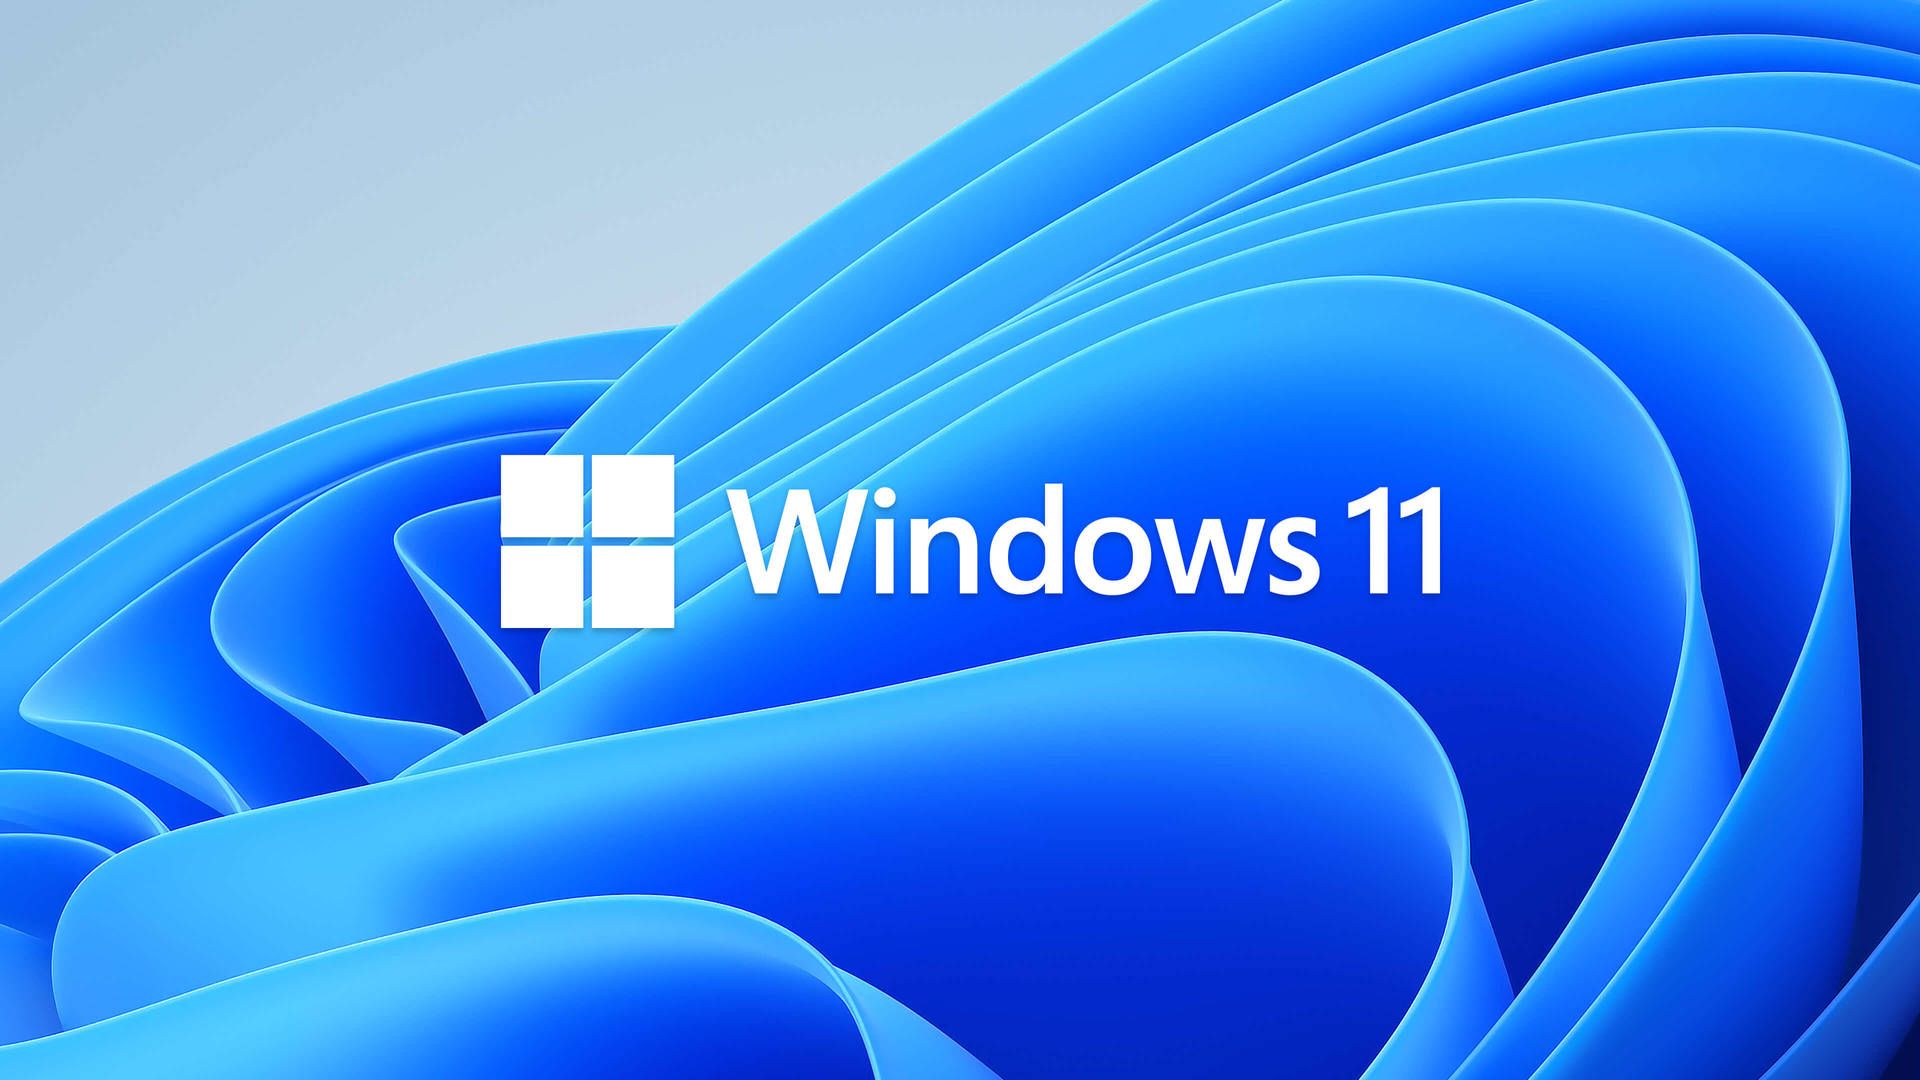 Windows 10 logo on a blue background - Windows 95